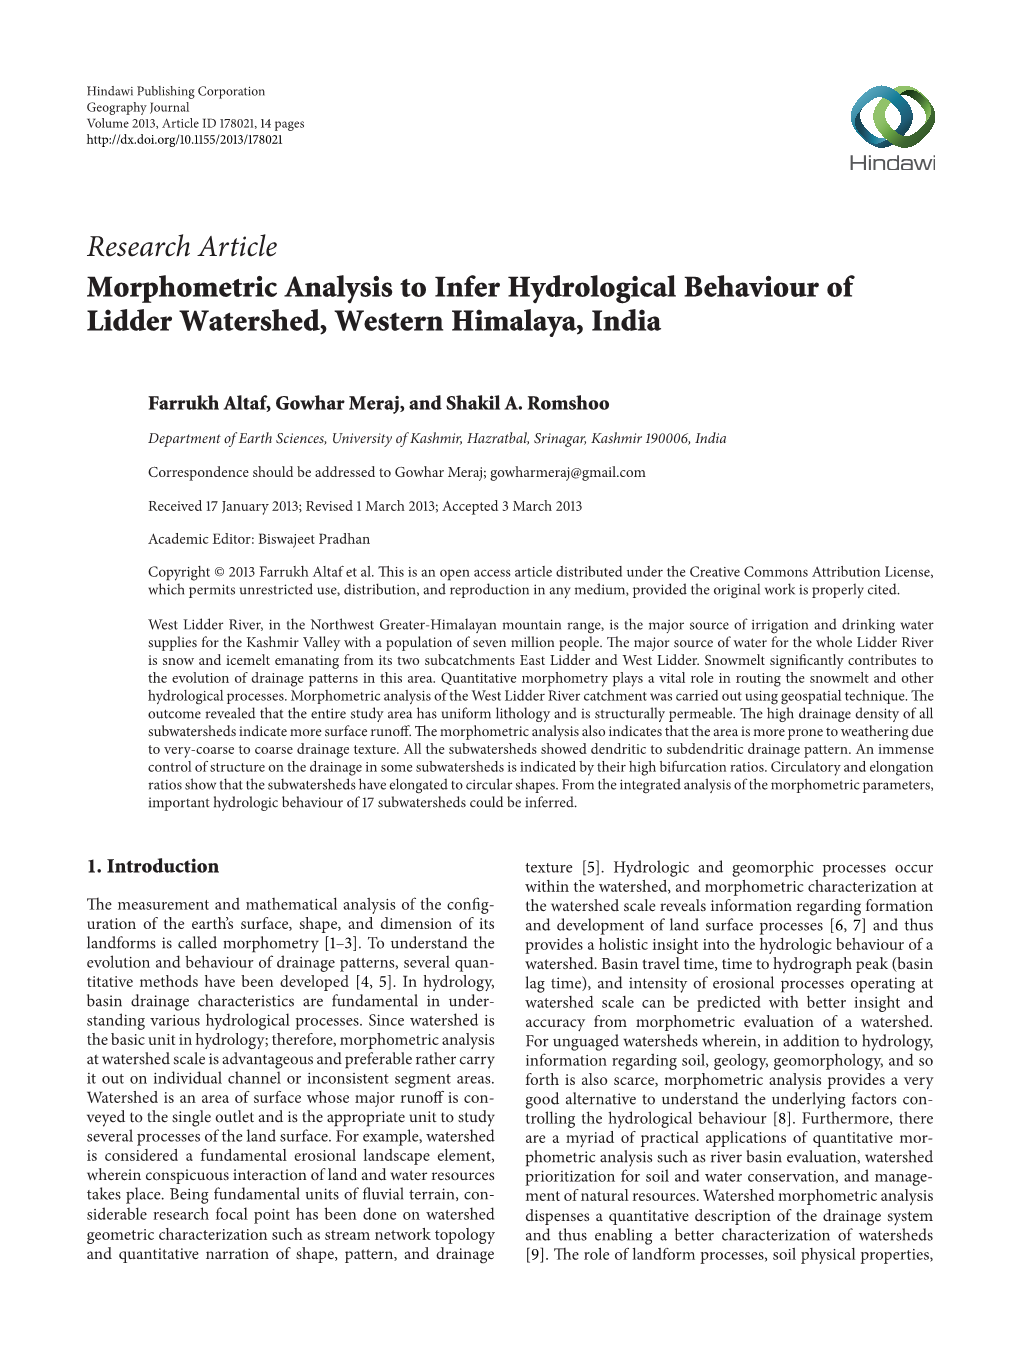 Morphometric Analysis to Infer Hydrological Behaviour of Lidder Watershed, Western Himalaya, India